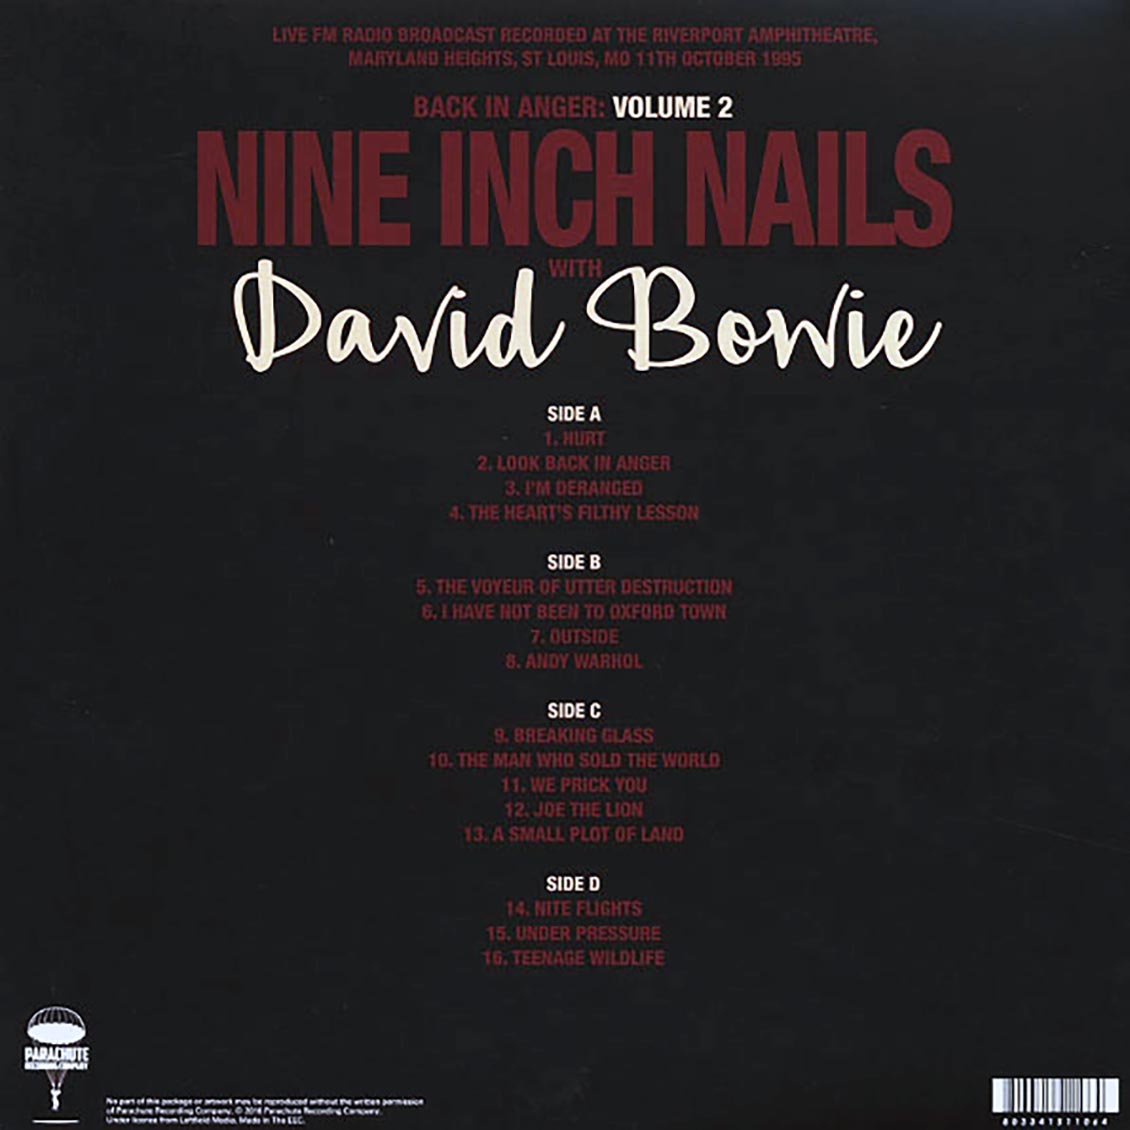 Nine Inch Nails, David Bowie - Back In Anger: Volume 2 (ltd. ed.) (2xLP) - Vinyl LP, LP